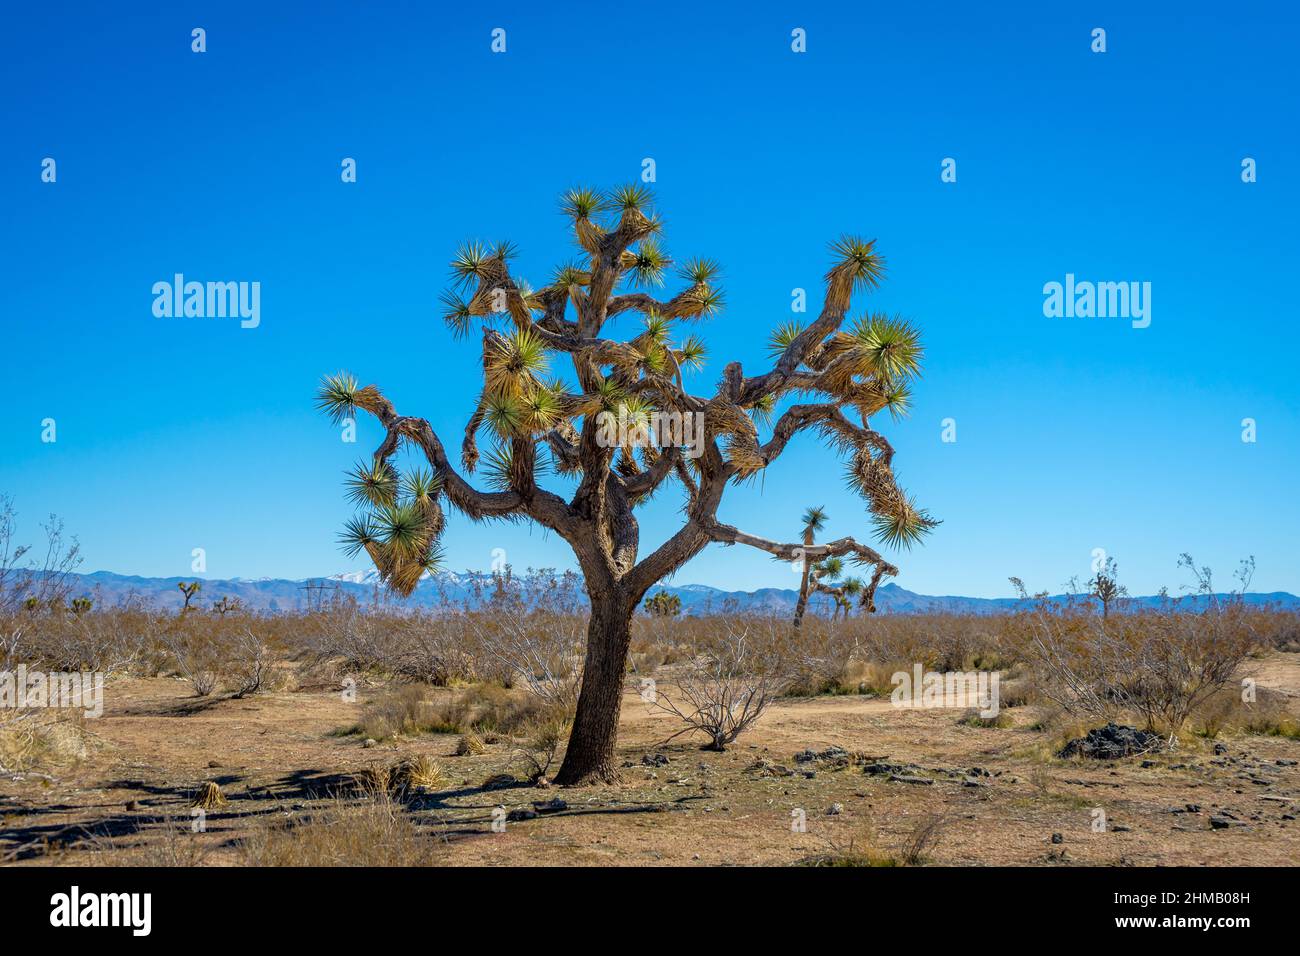 An old large Joshua Tree on the open desert landscape Stock Photo